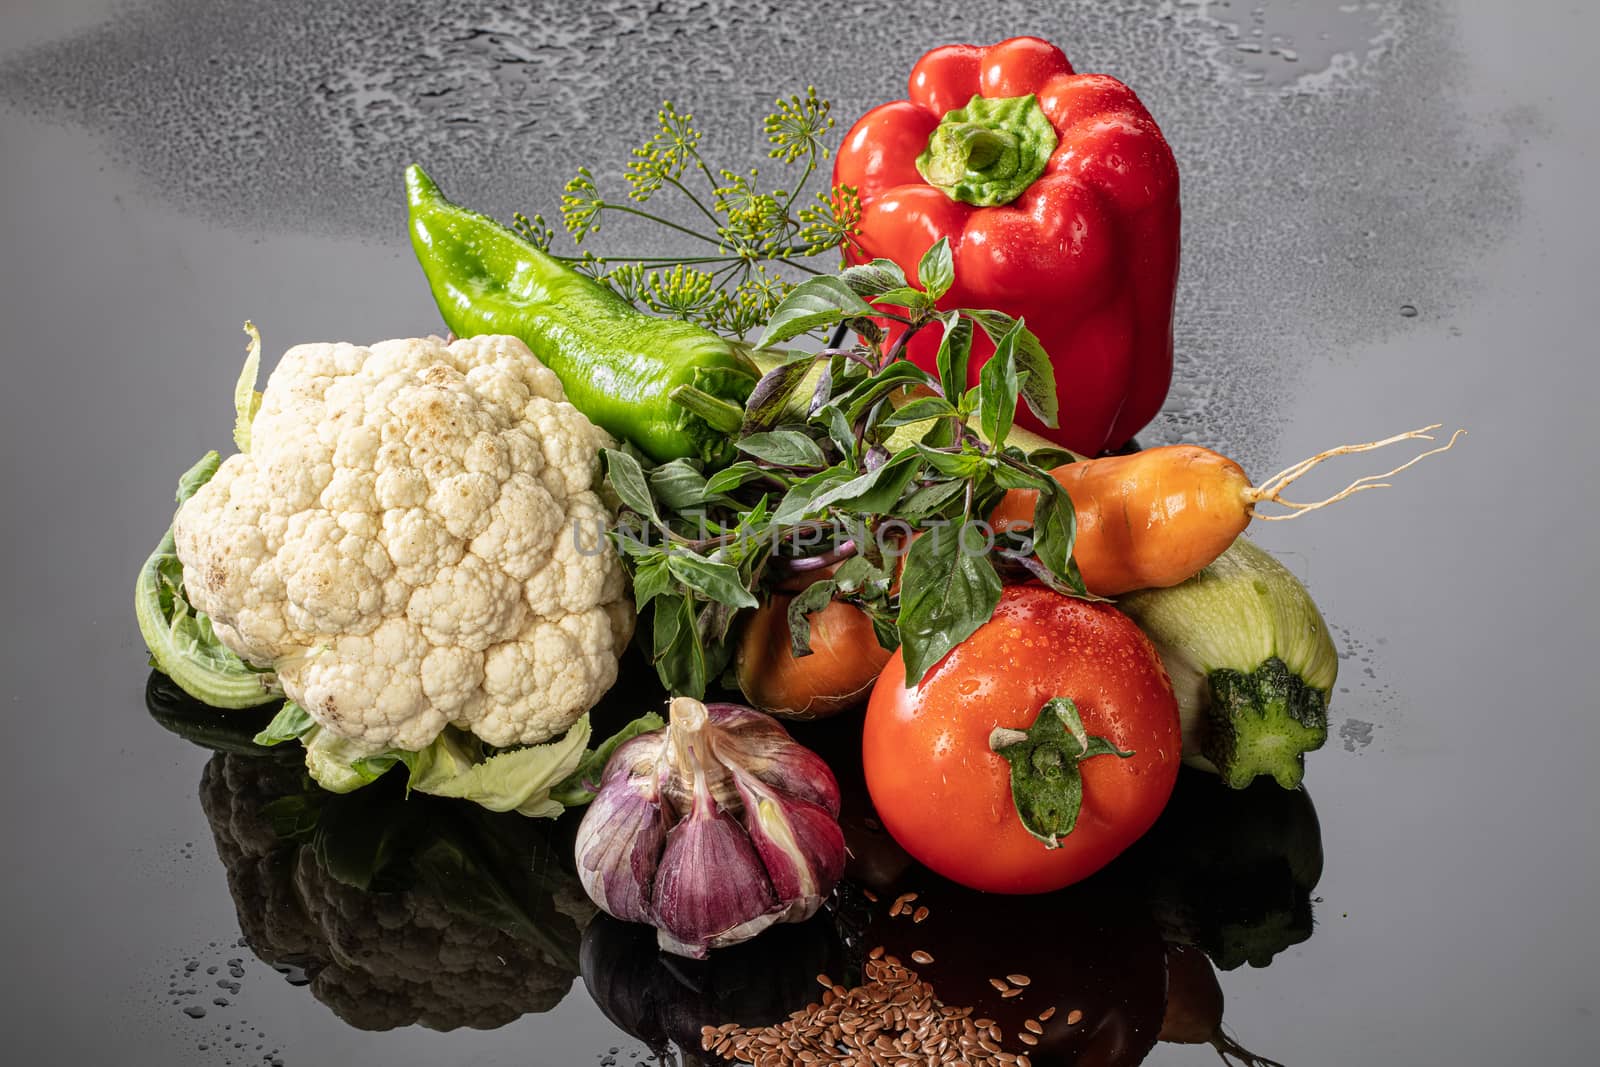 Vegetables On A Glass by Fotoskat